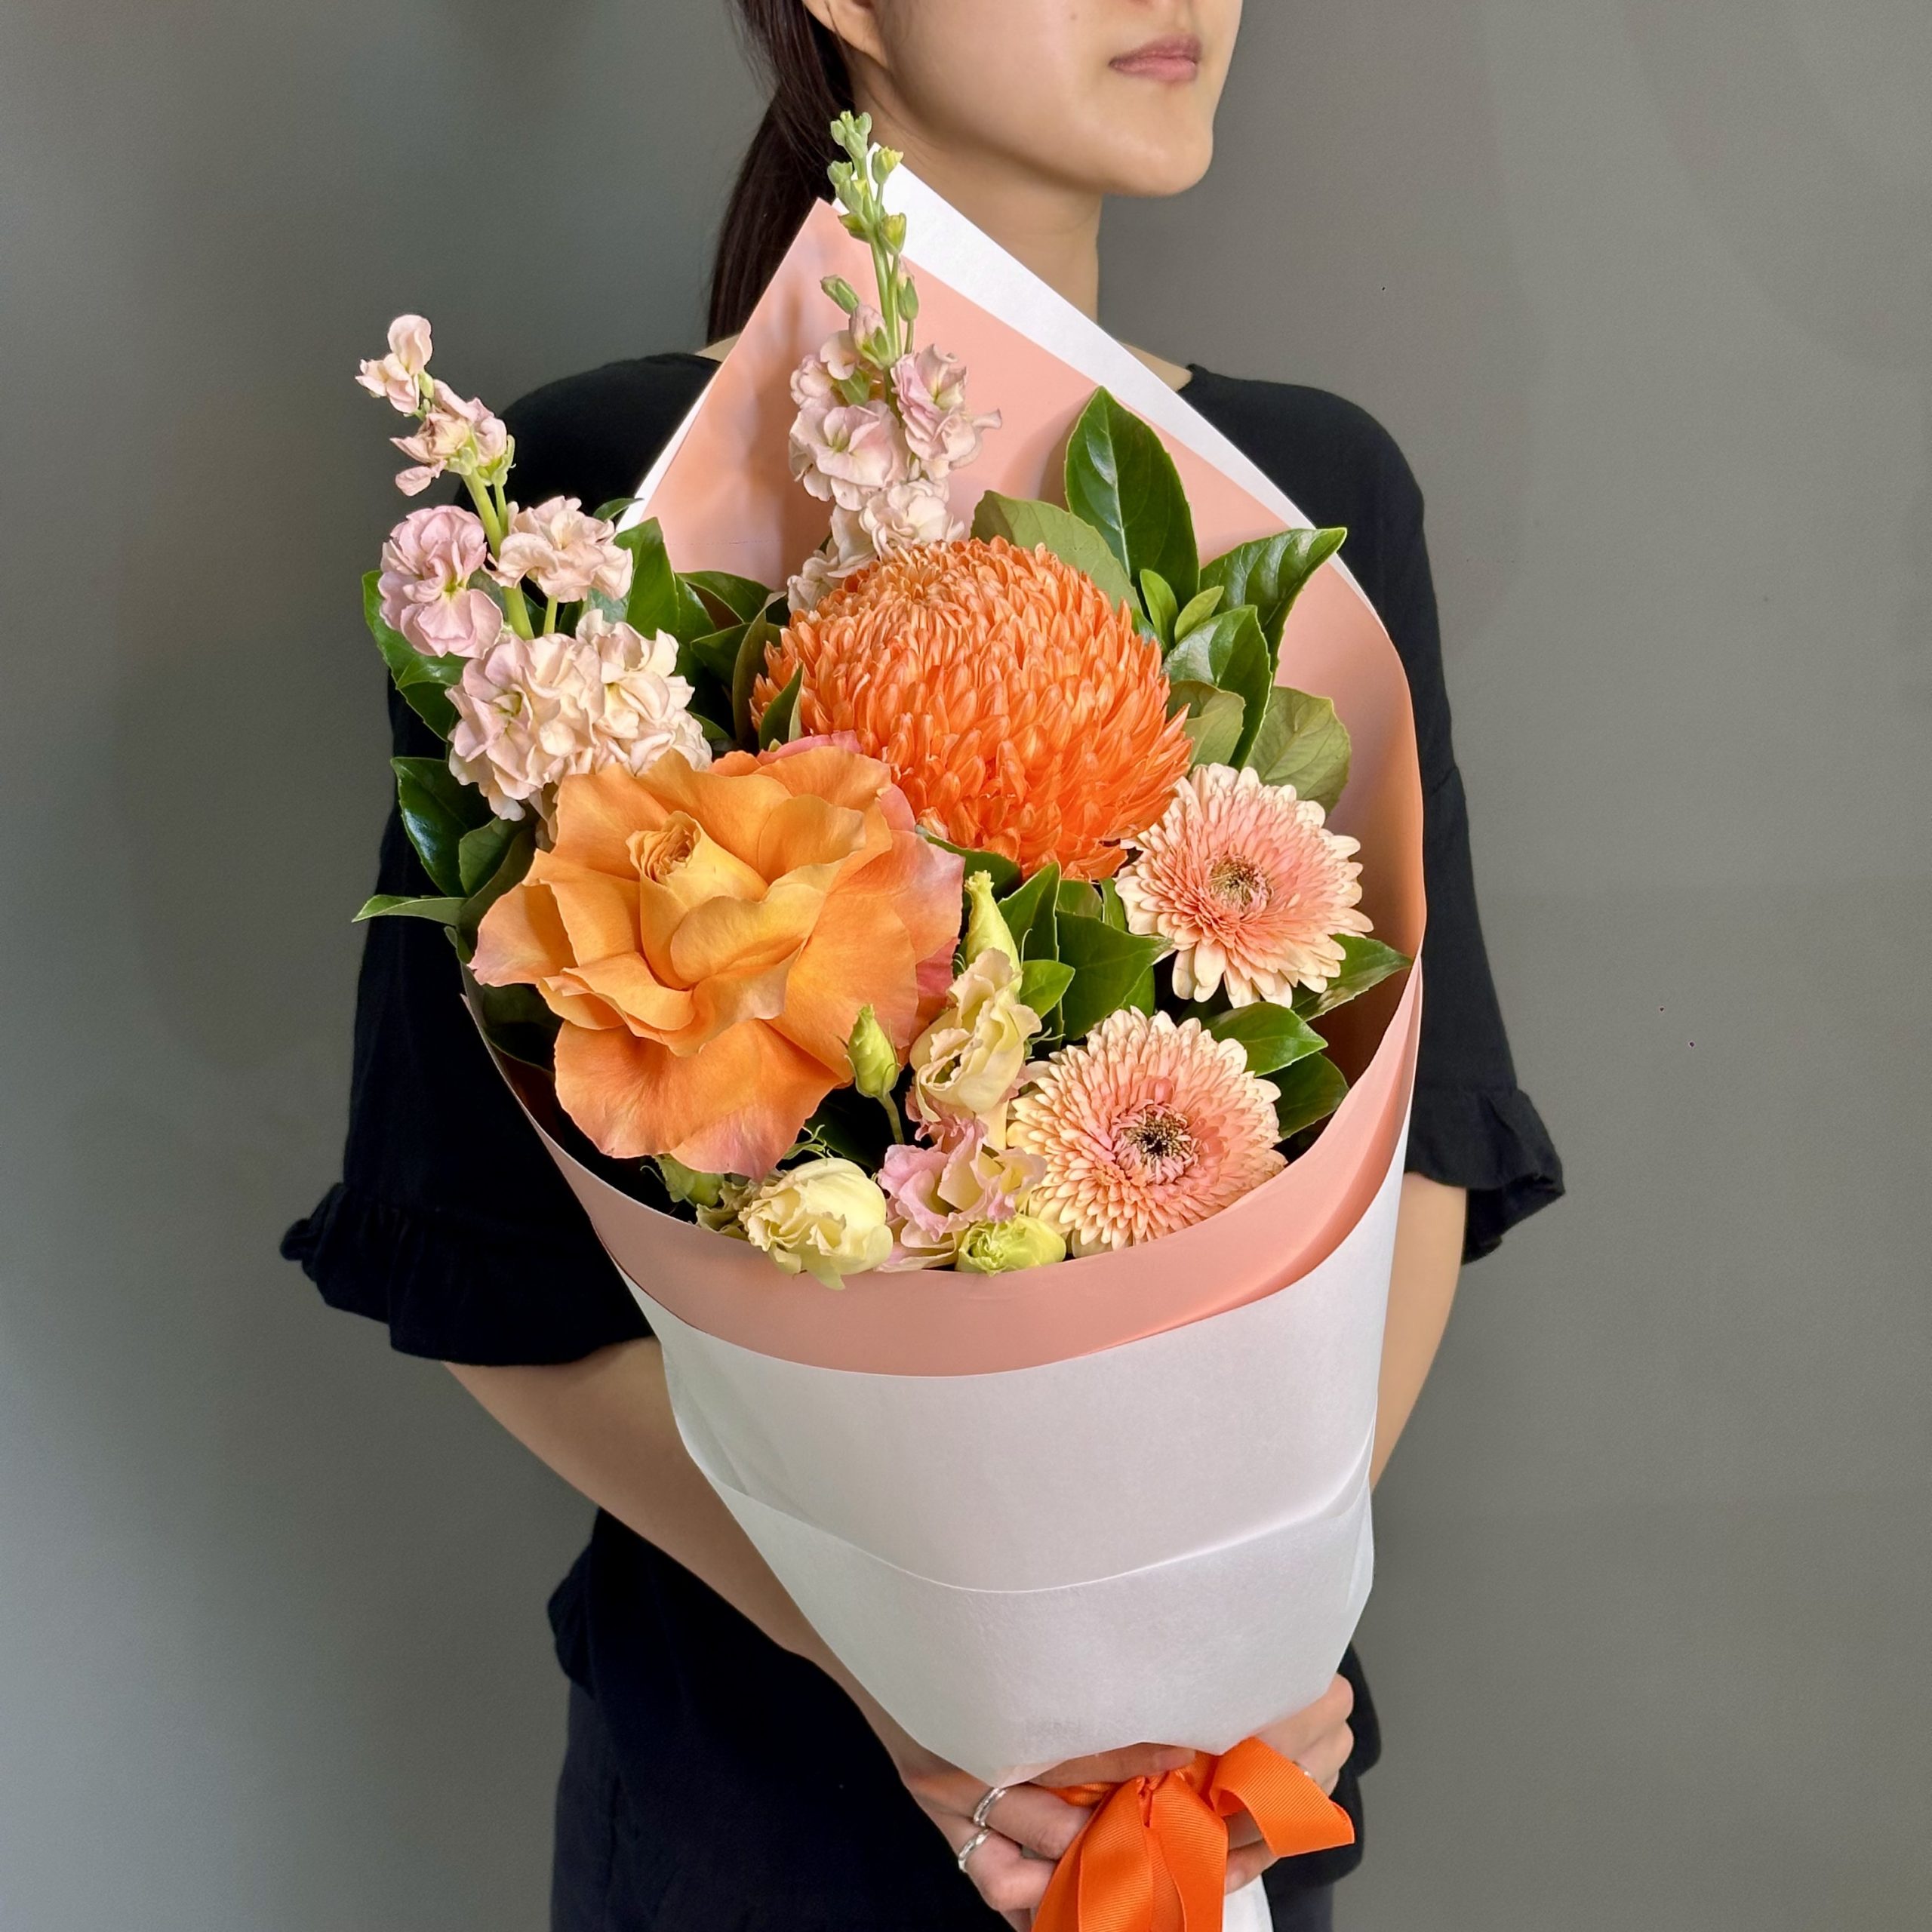 orange bouquet